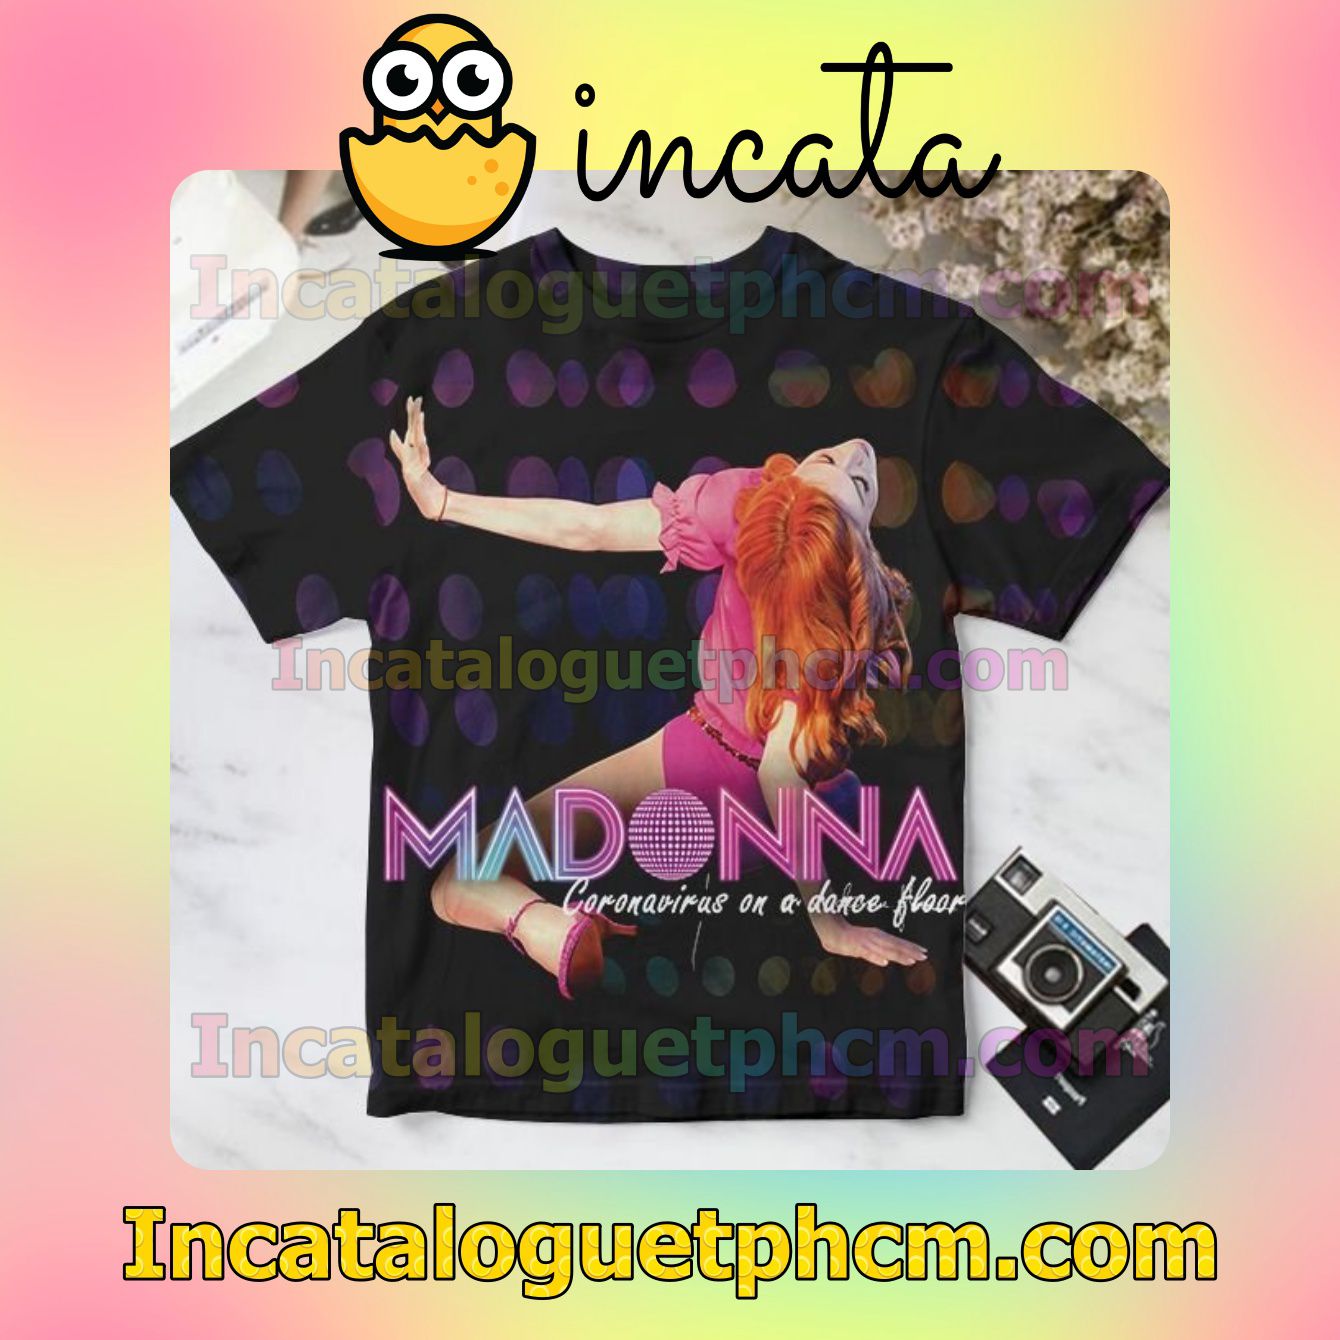 Madonna Coronavirus On A Dance Floor Personalized Shirt